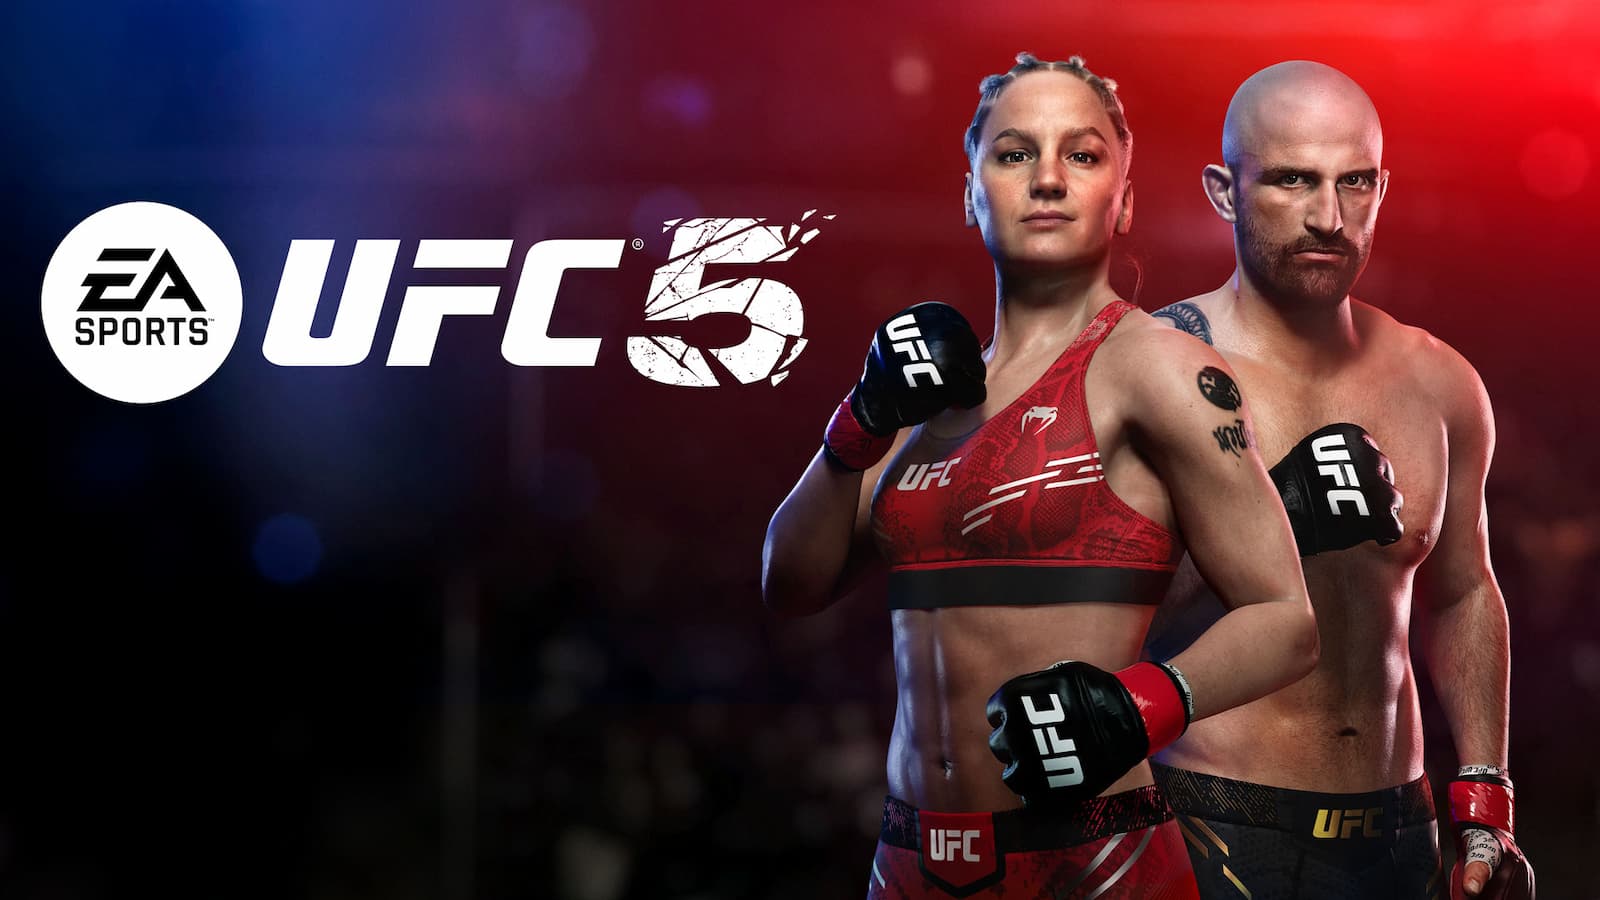 EA Sports UFC 5 cover art